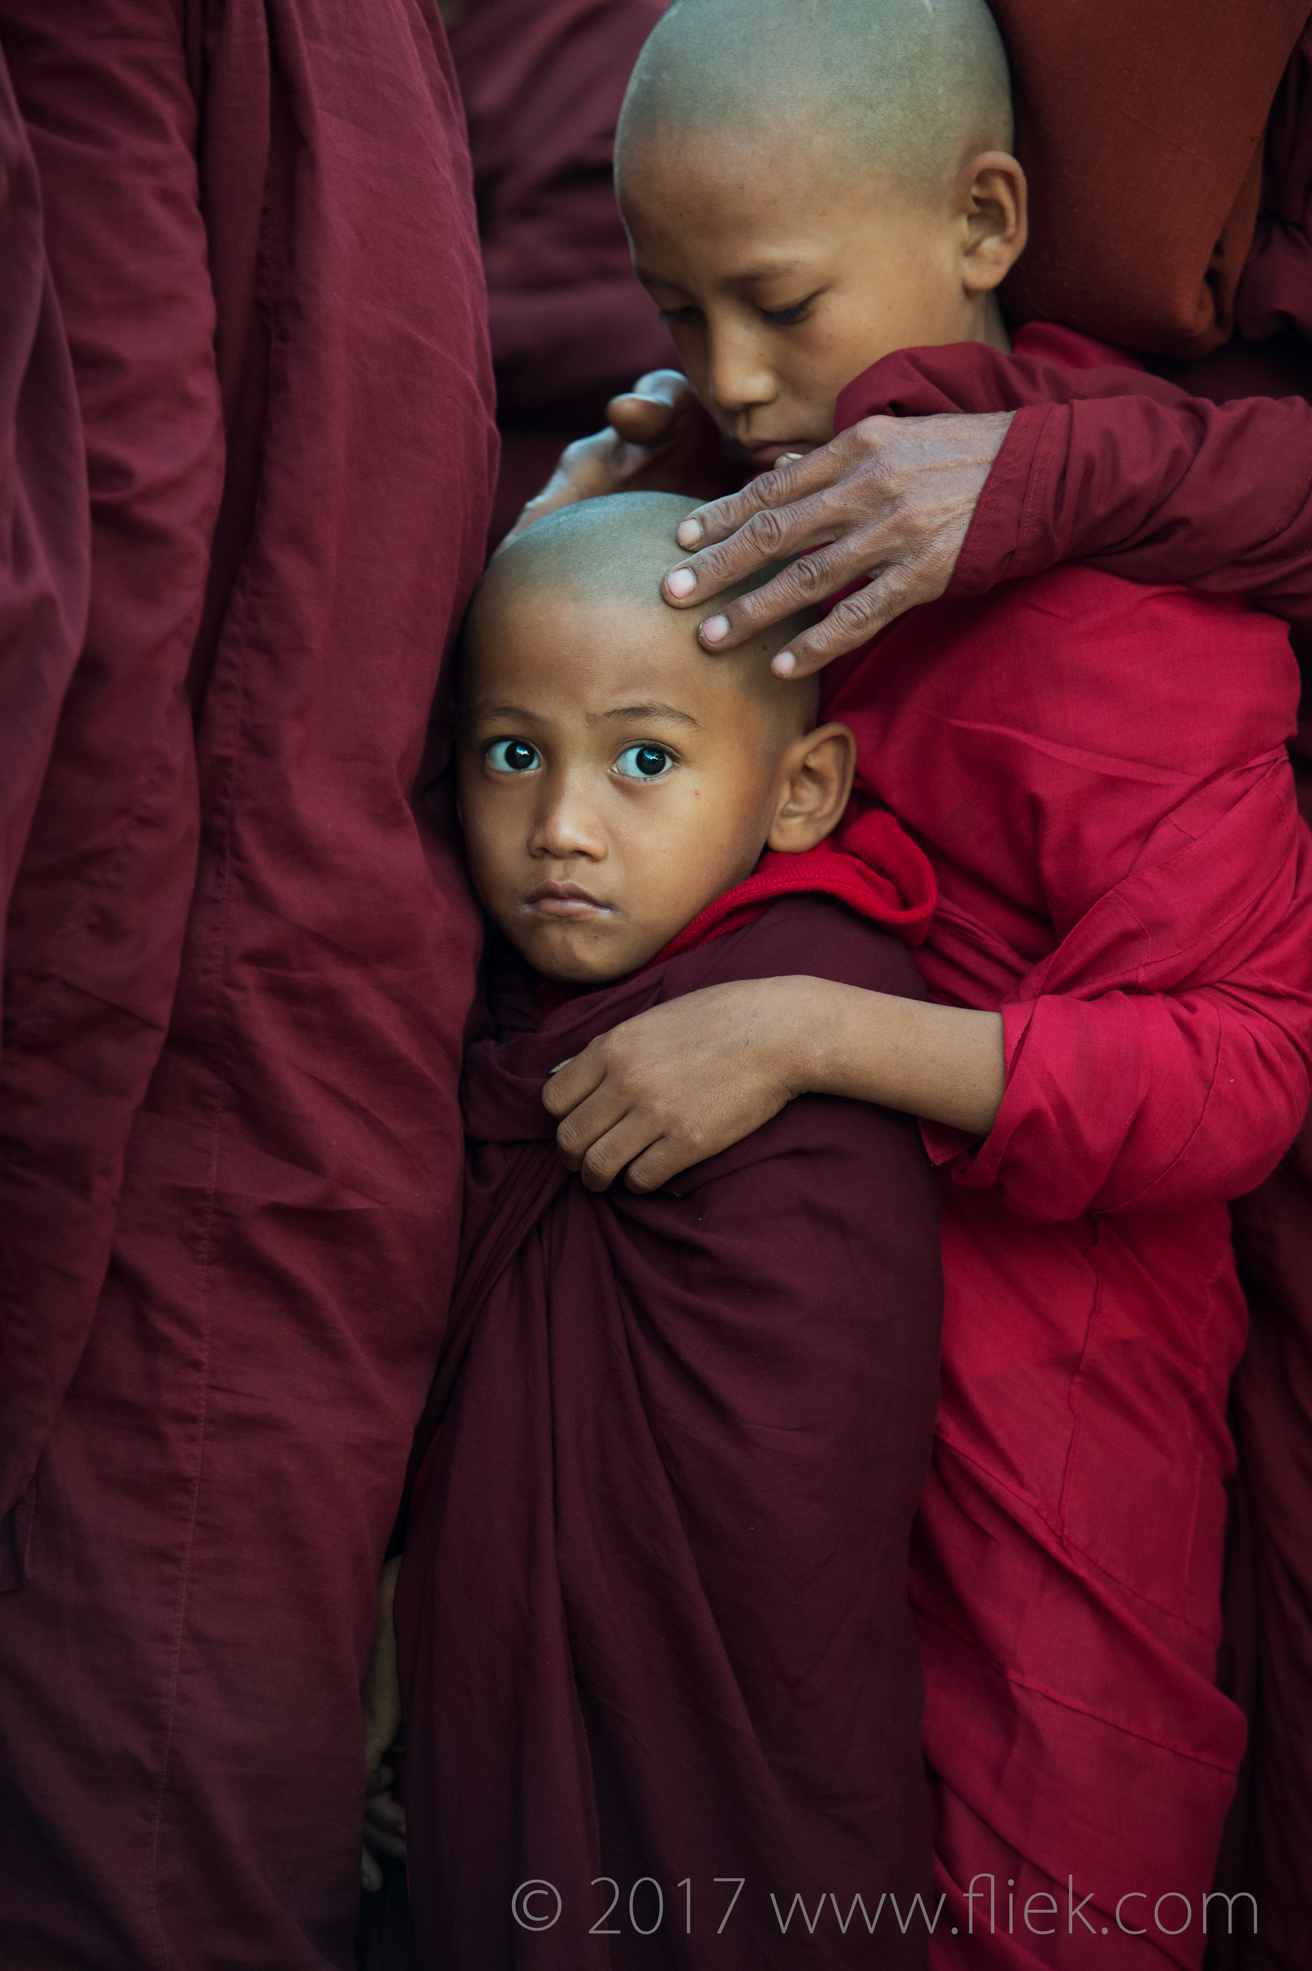 Magical mysterious Myanmar...&lt;br&gt;&lt;i&gt; Ananda pagoda festival monks